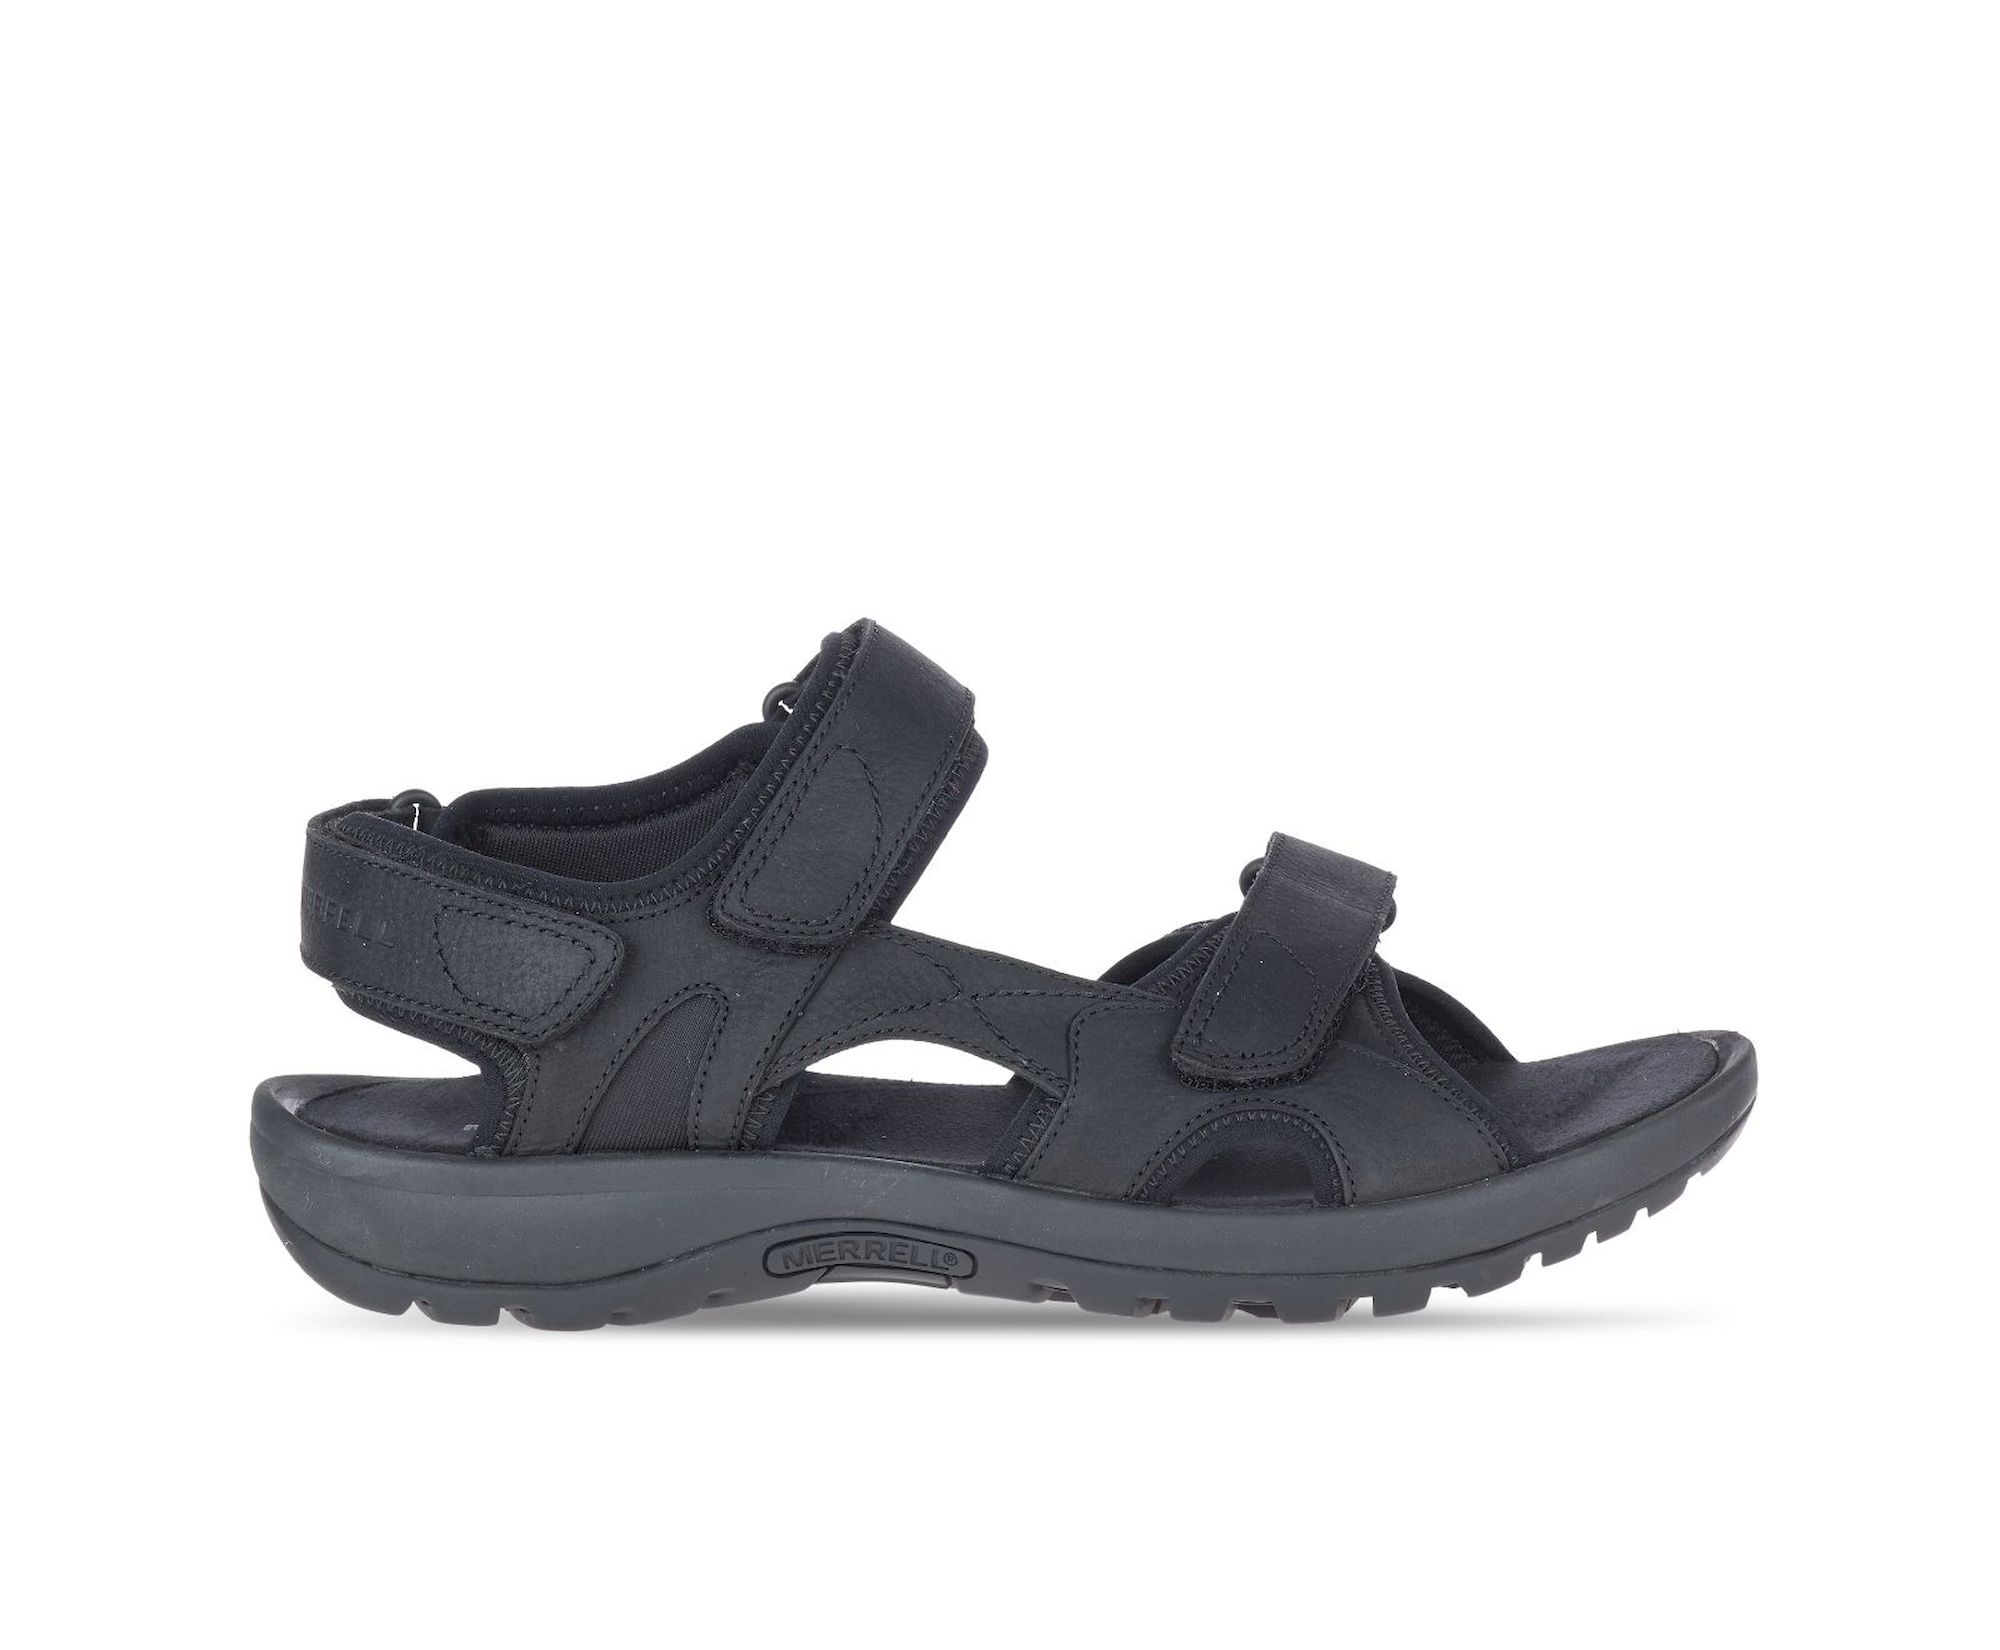 Merrell Sandspur 2 Convert - Walking sandals - Men's